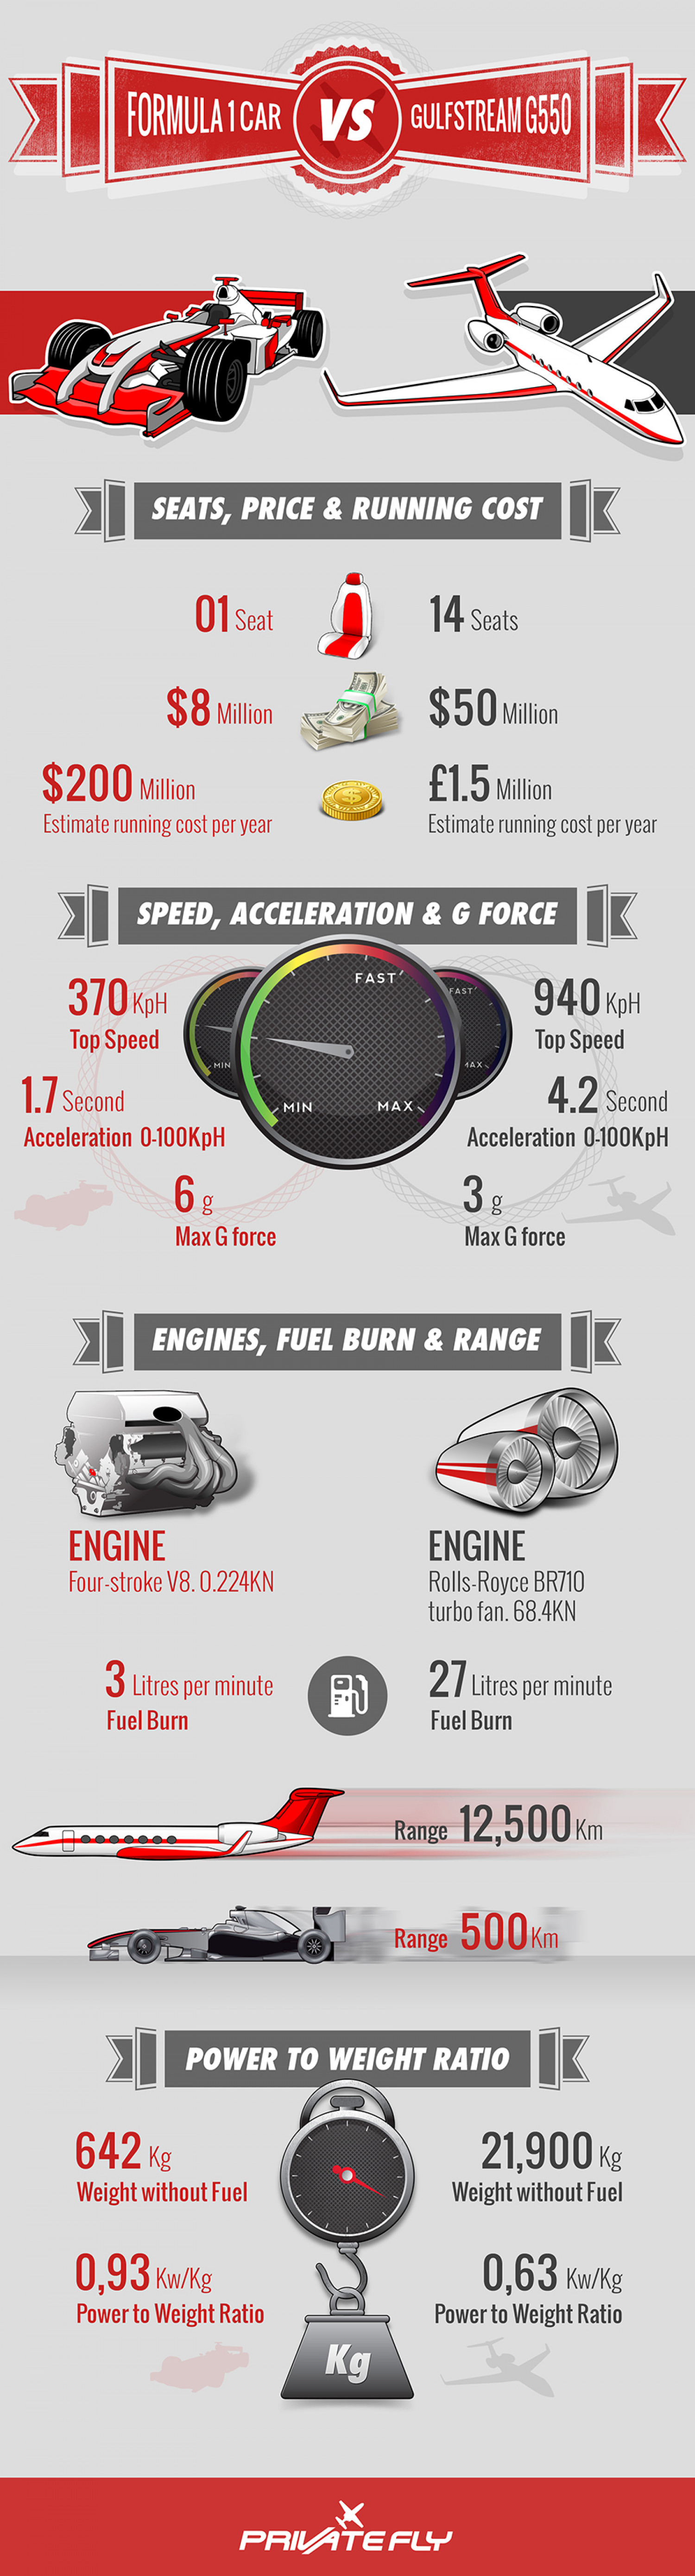 Formula 1 Car vs Gulfstream Jet Infographic